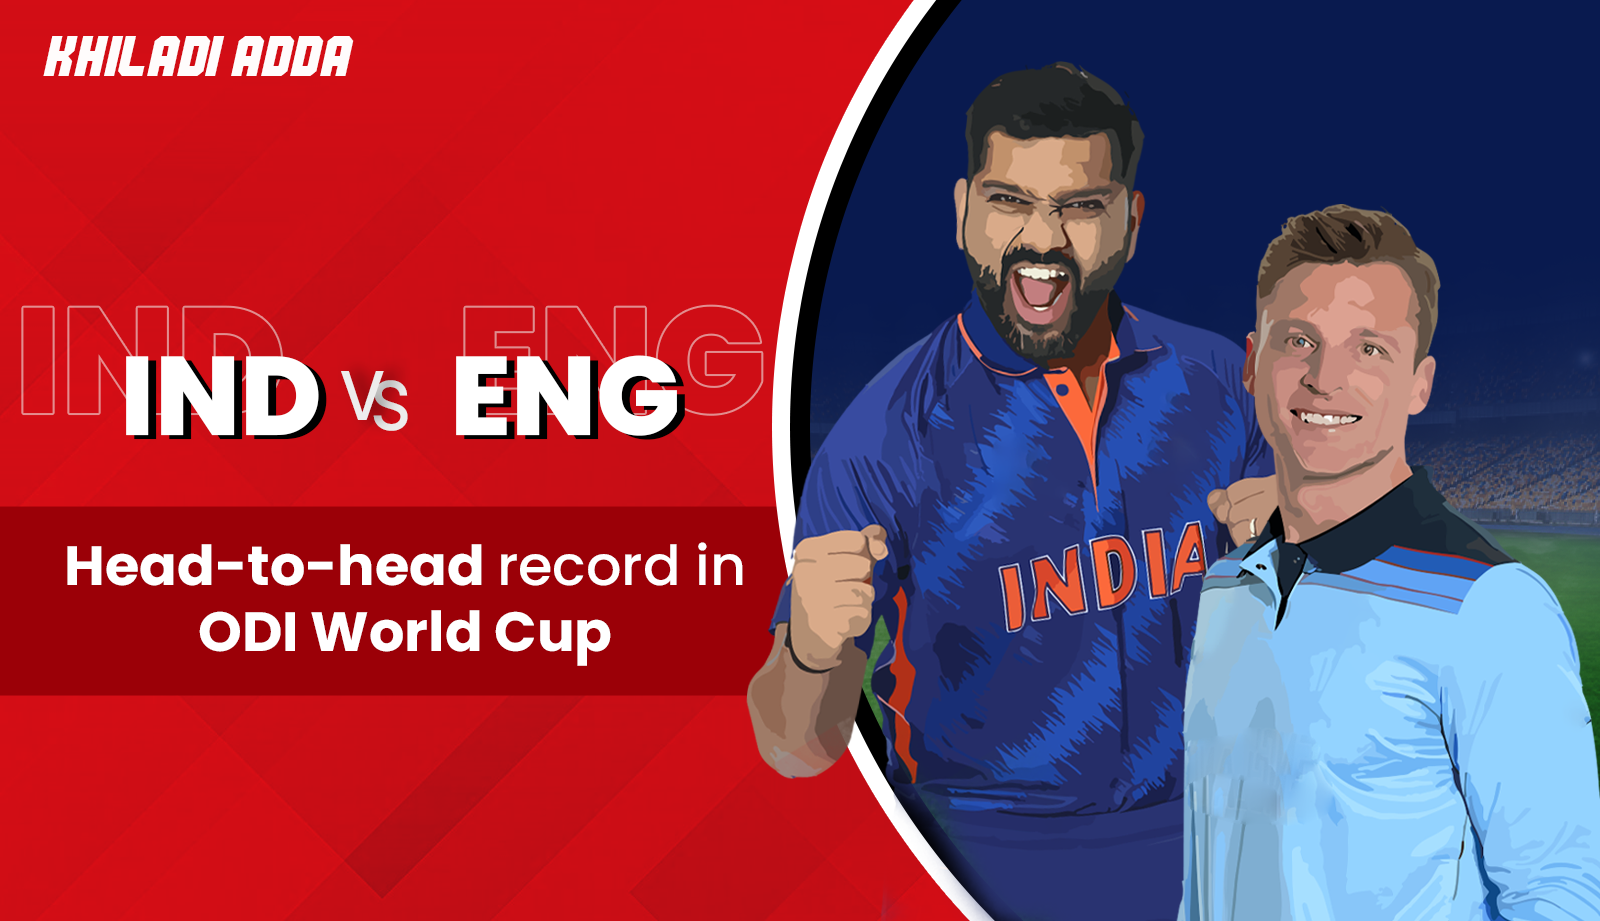  Ind vs Eng: Can England break India’s winning streak?